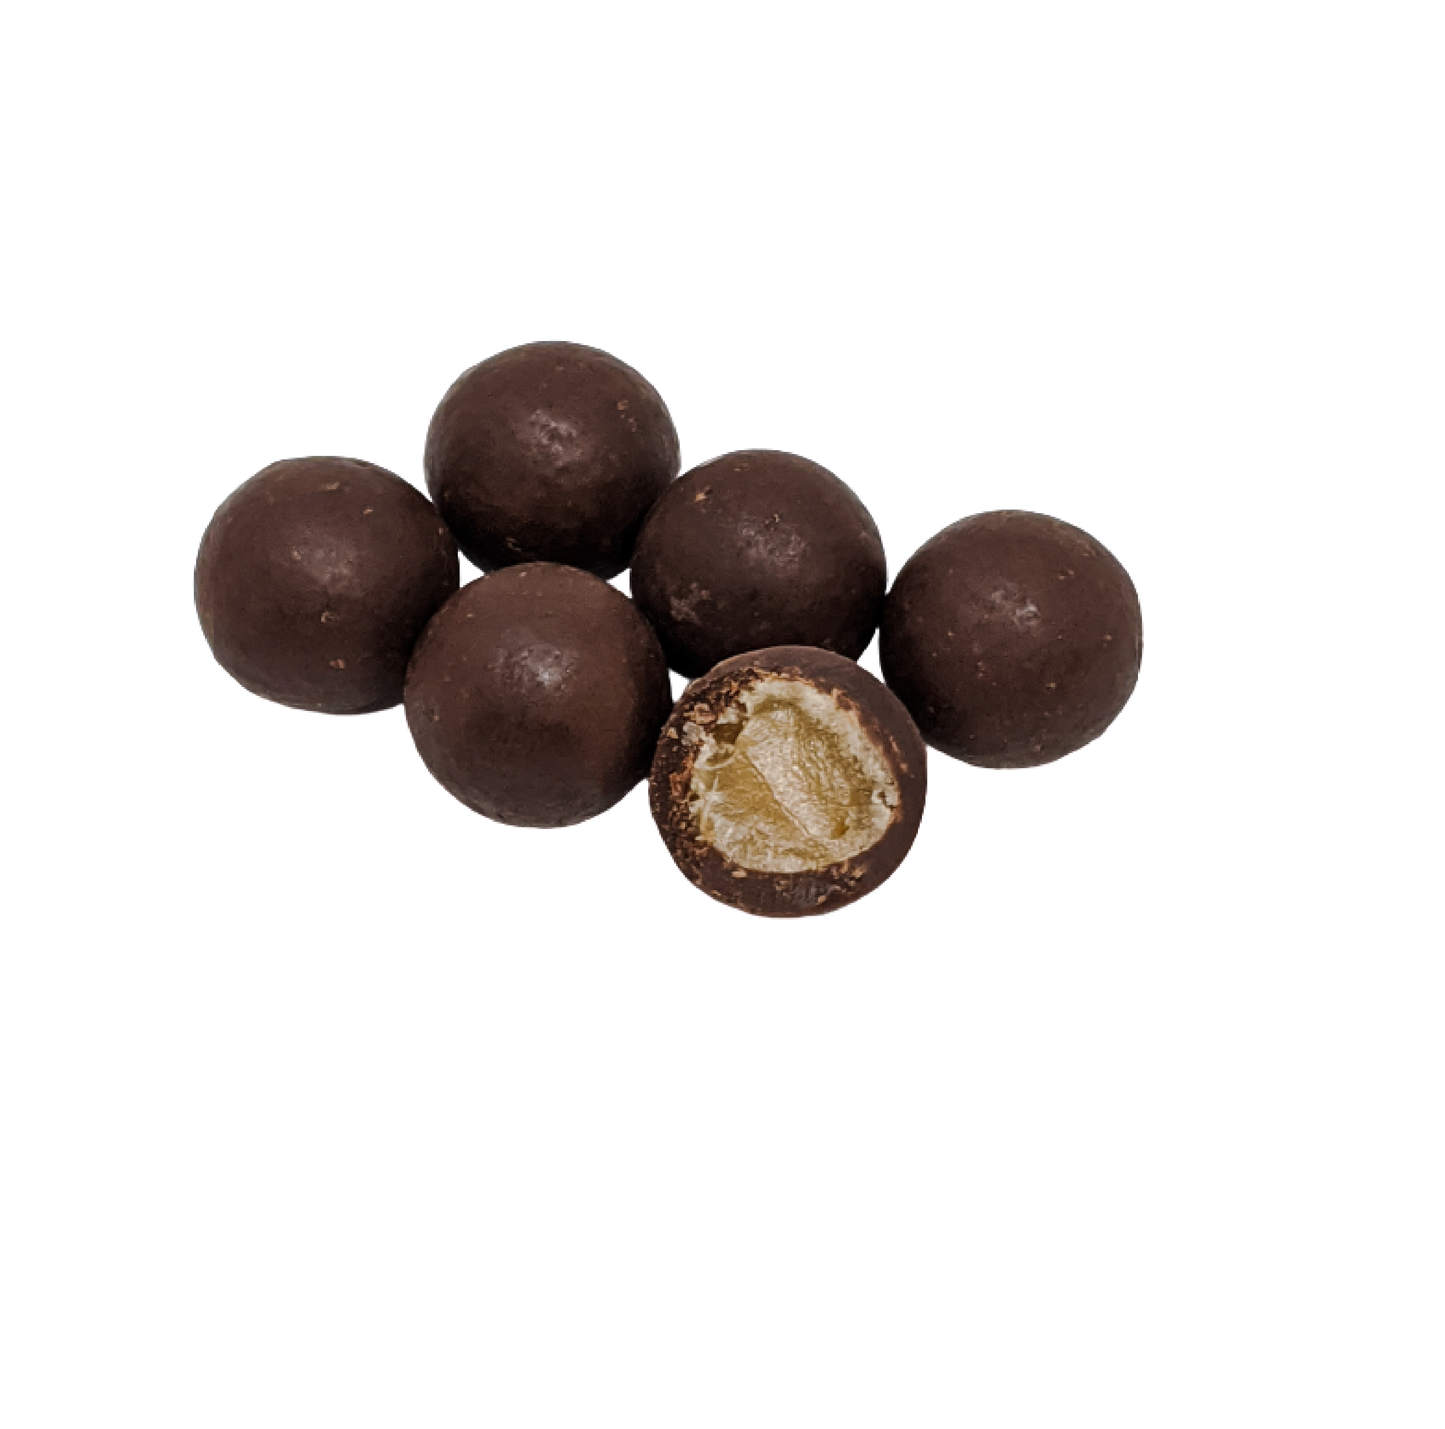 Chocolate Lover's Bourbon Caramels in Dark Chocolate - 3oz tin